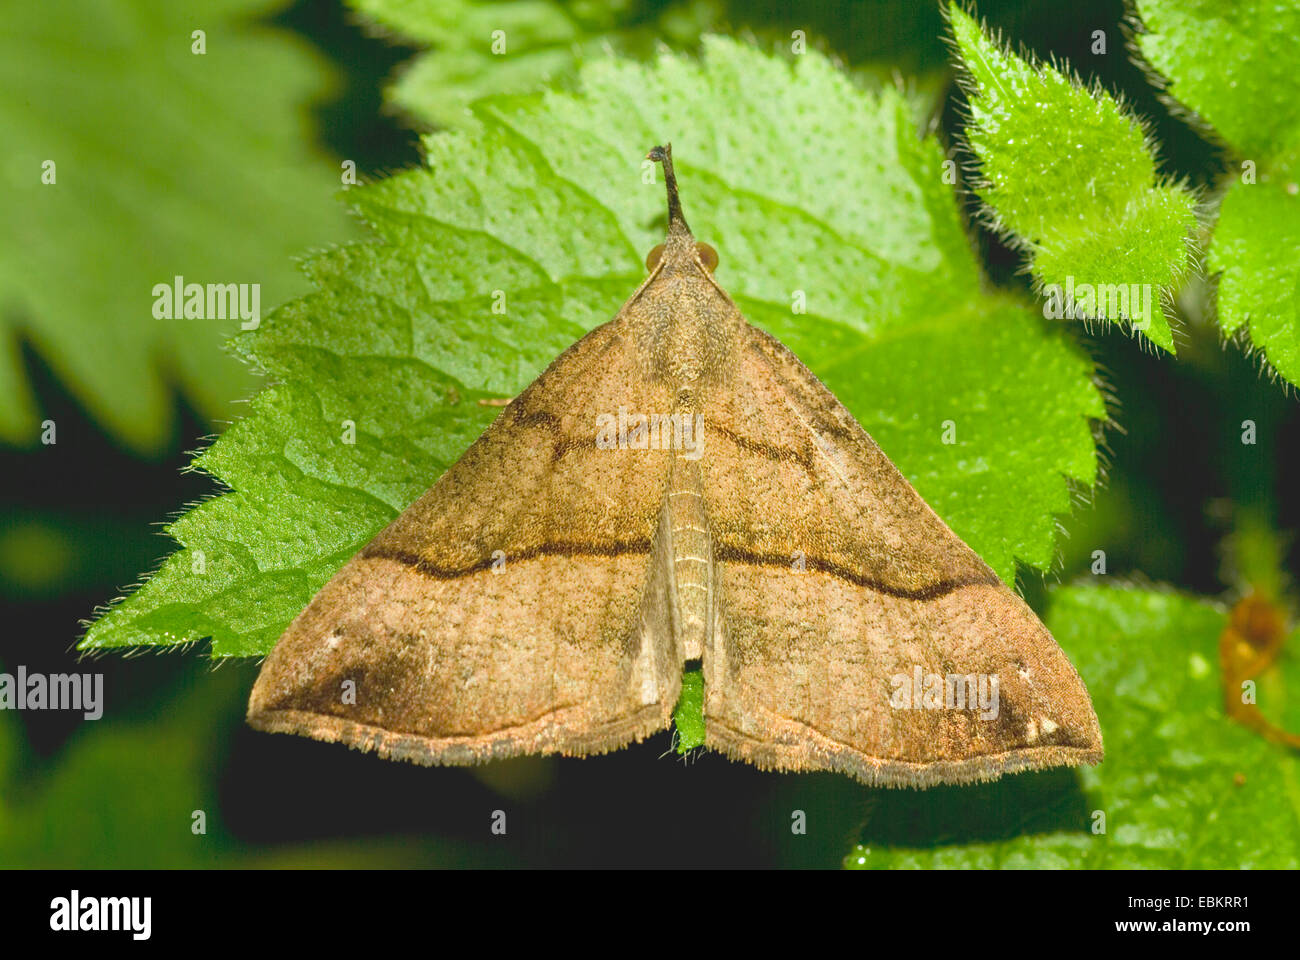 common snout (Hypena proboscidalis), sitting on a leaf, Germany Stock Photo